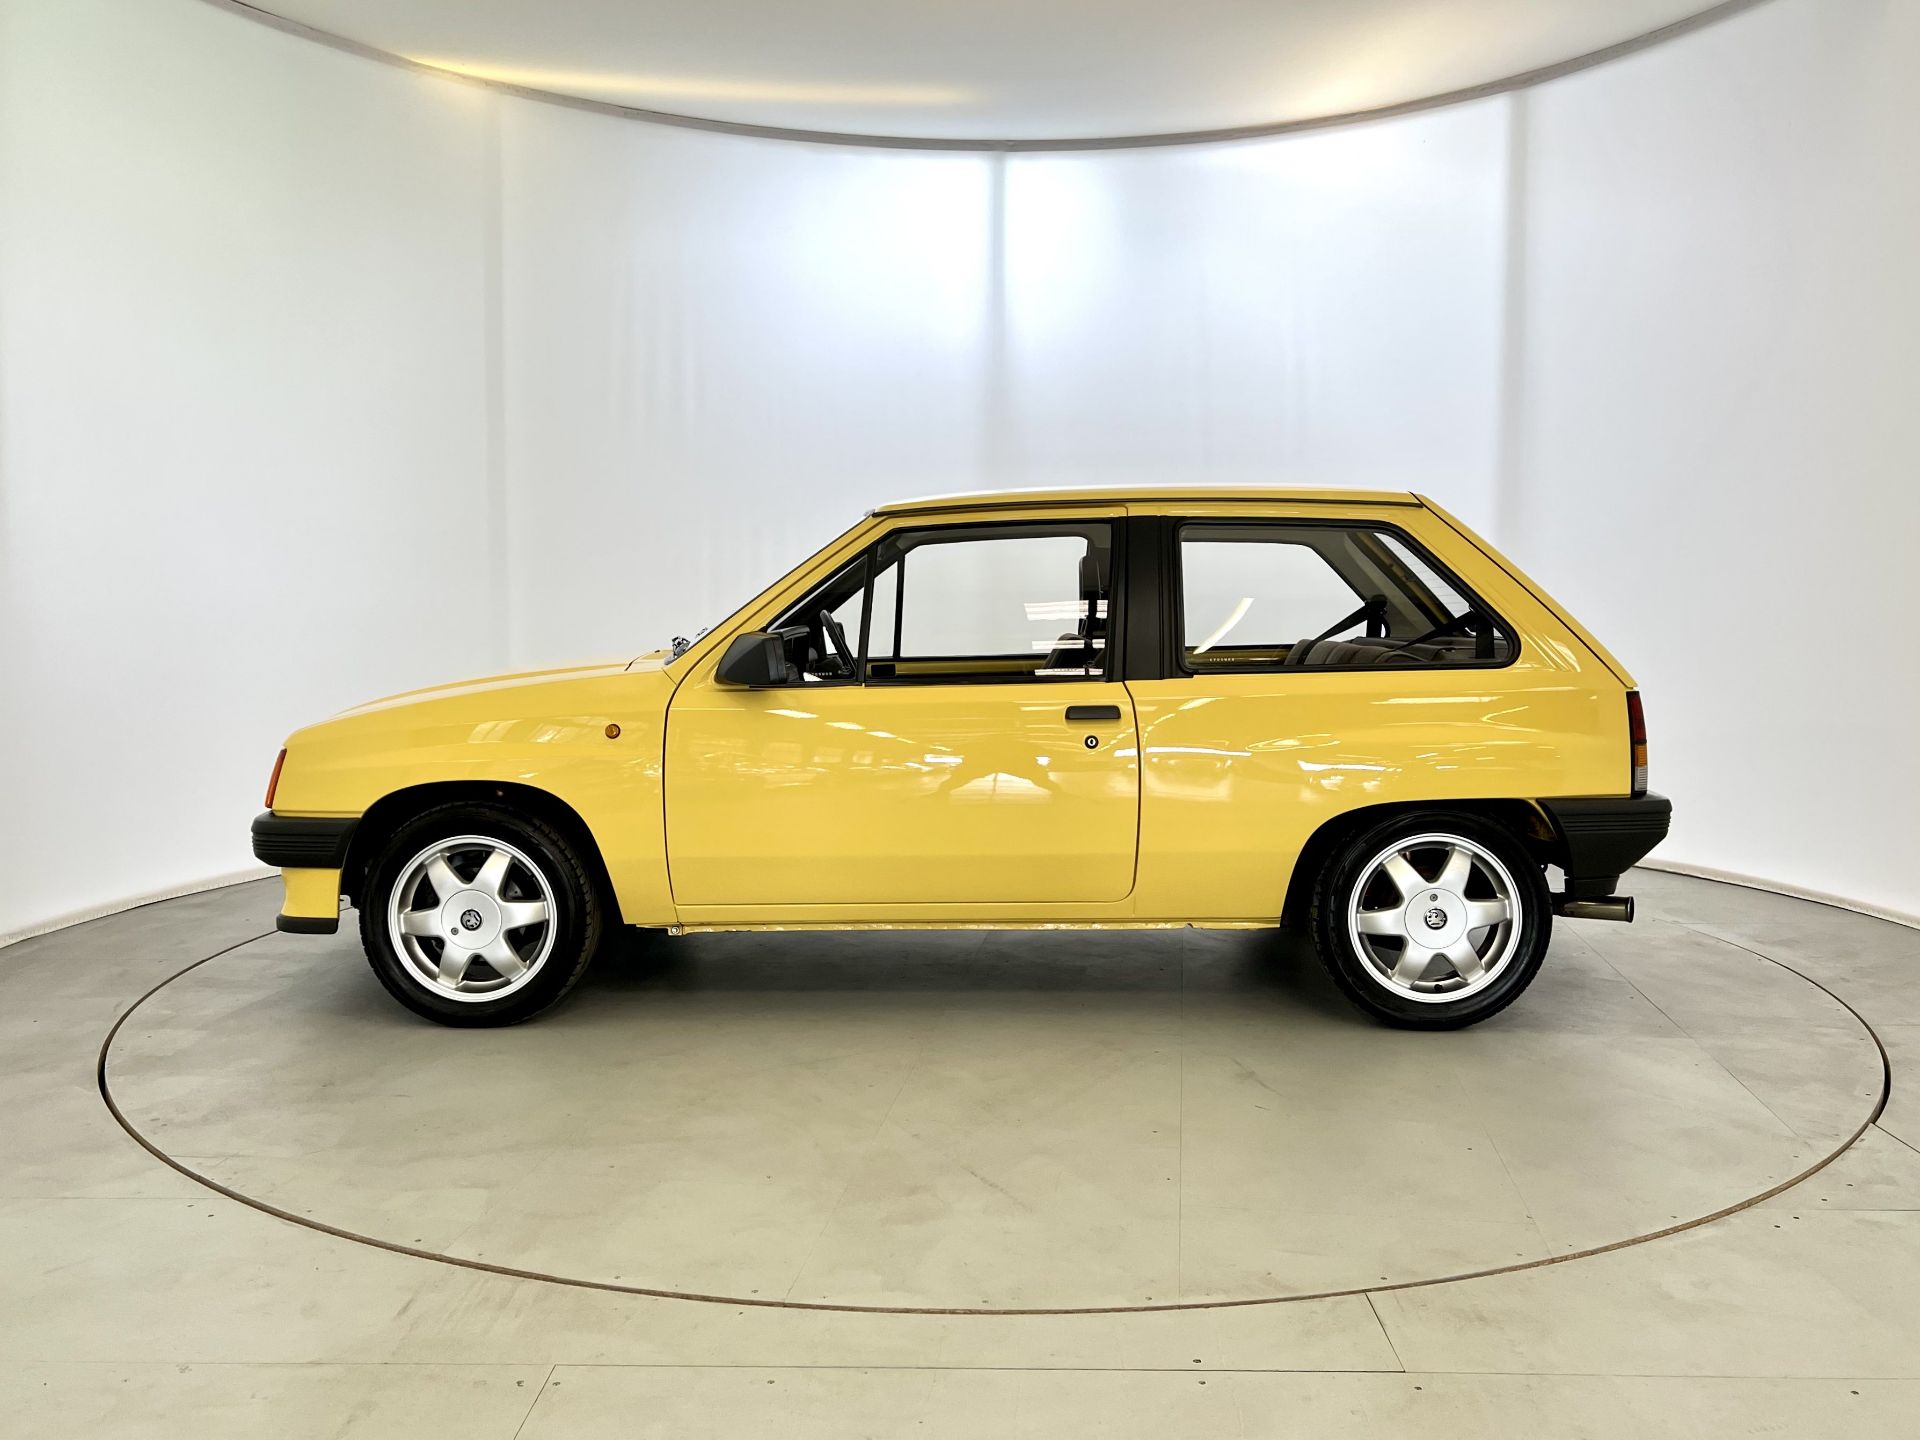 Vauxhall Nova - Image 5 of 33